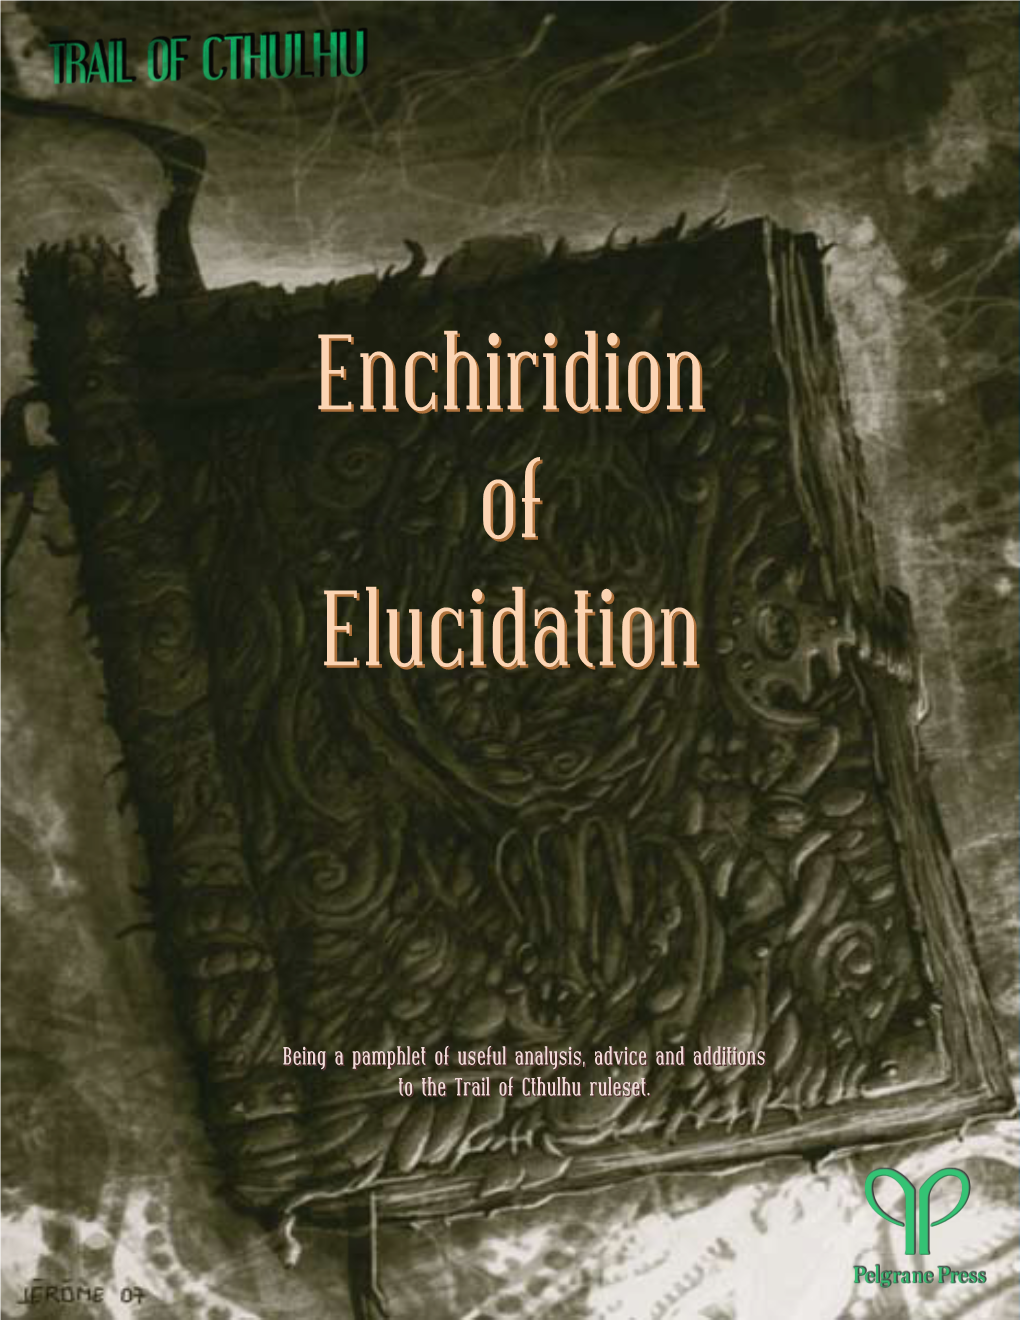 Enchiridion of Elucidation